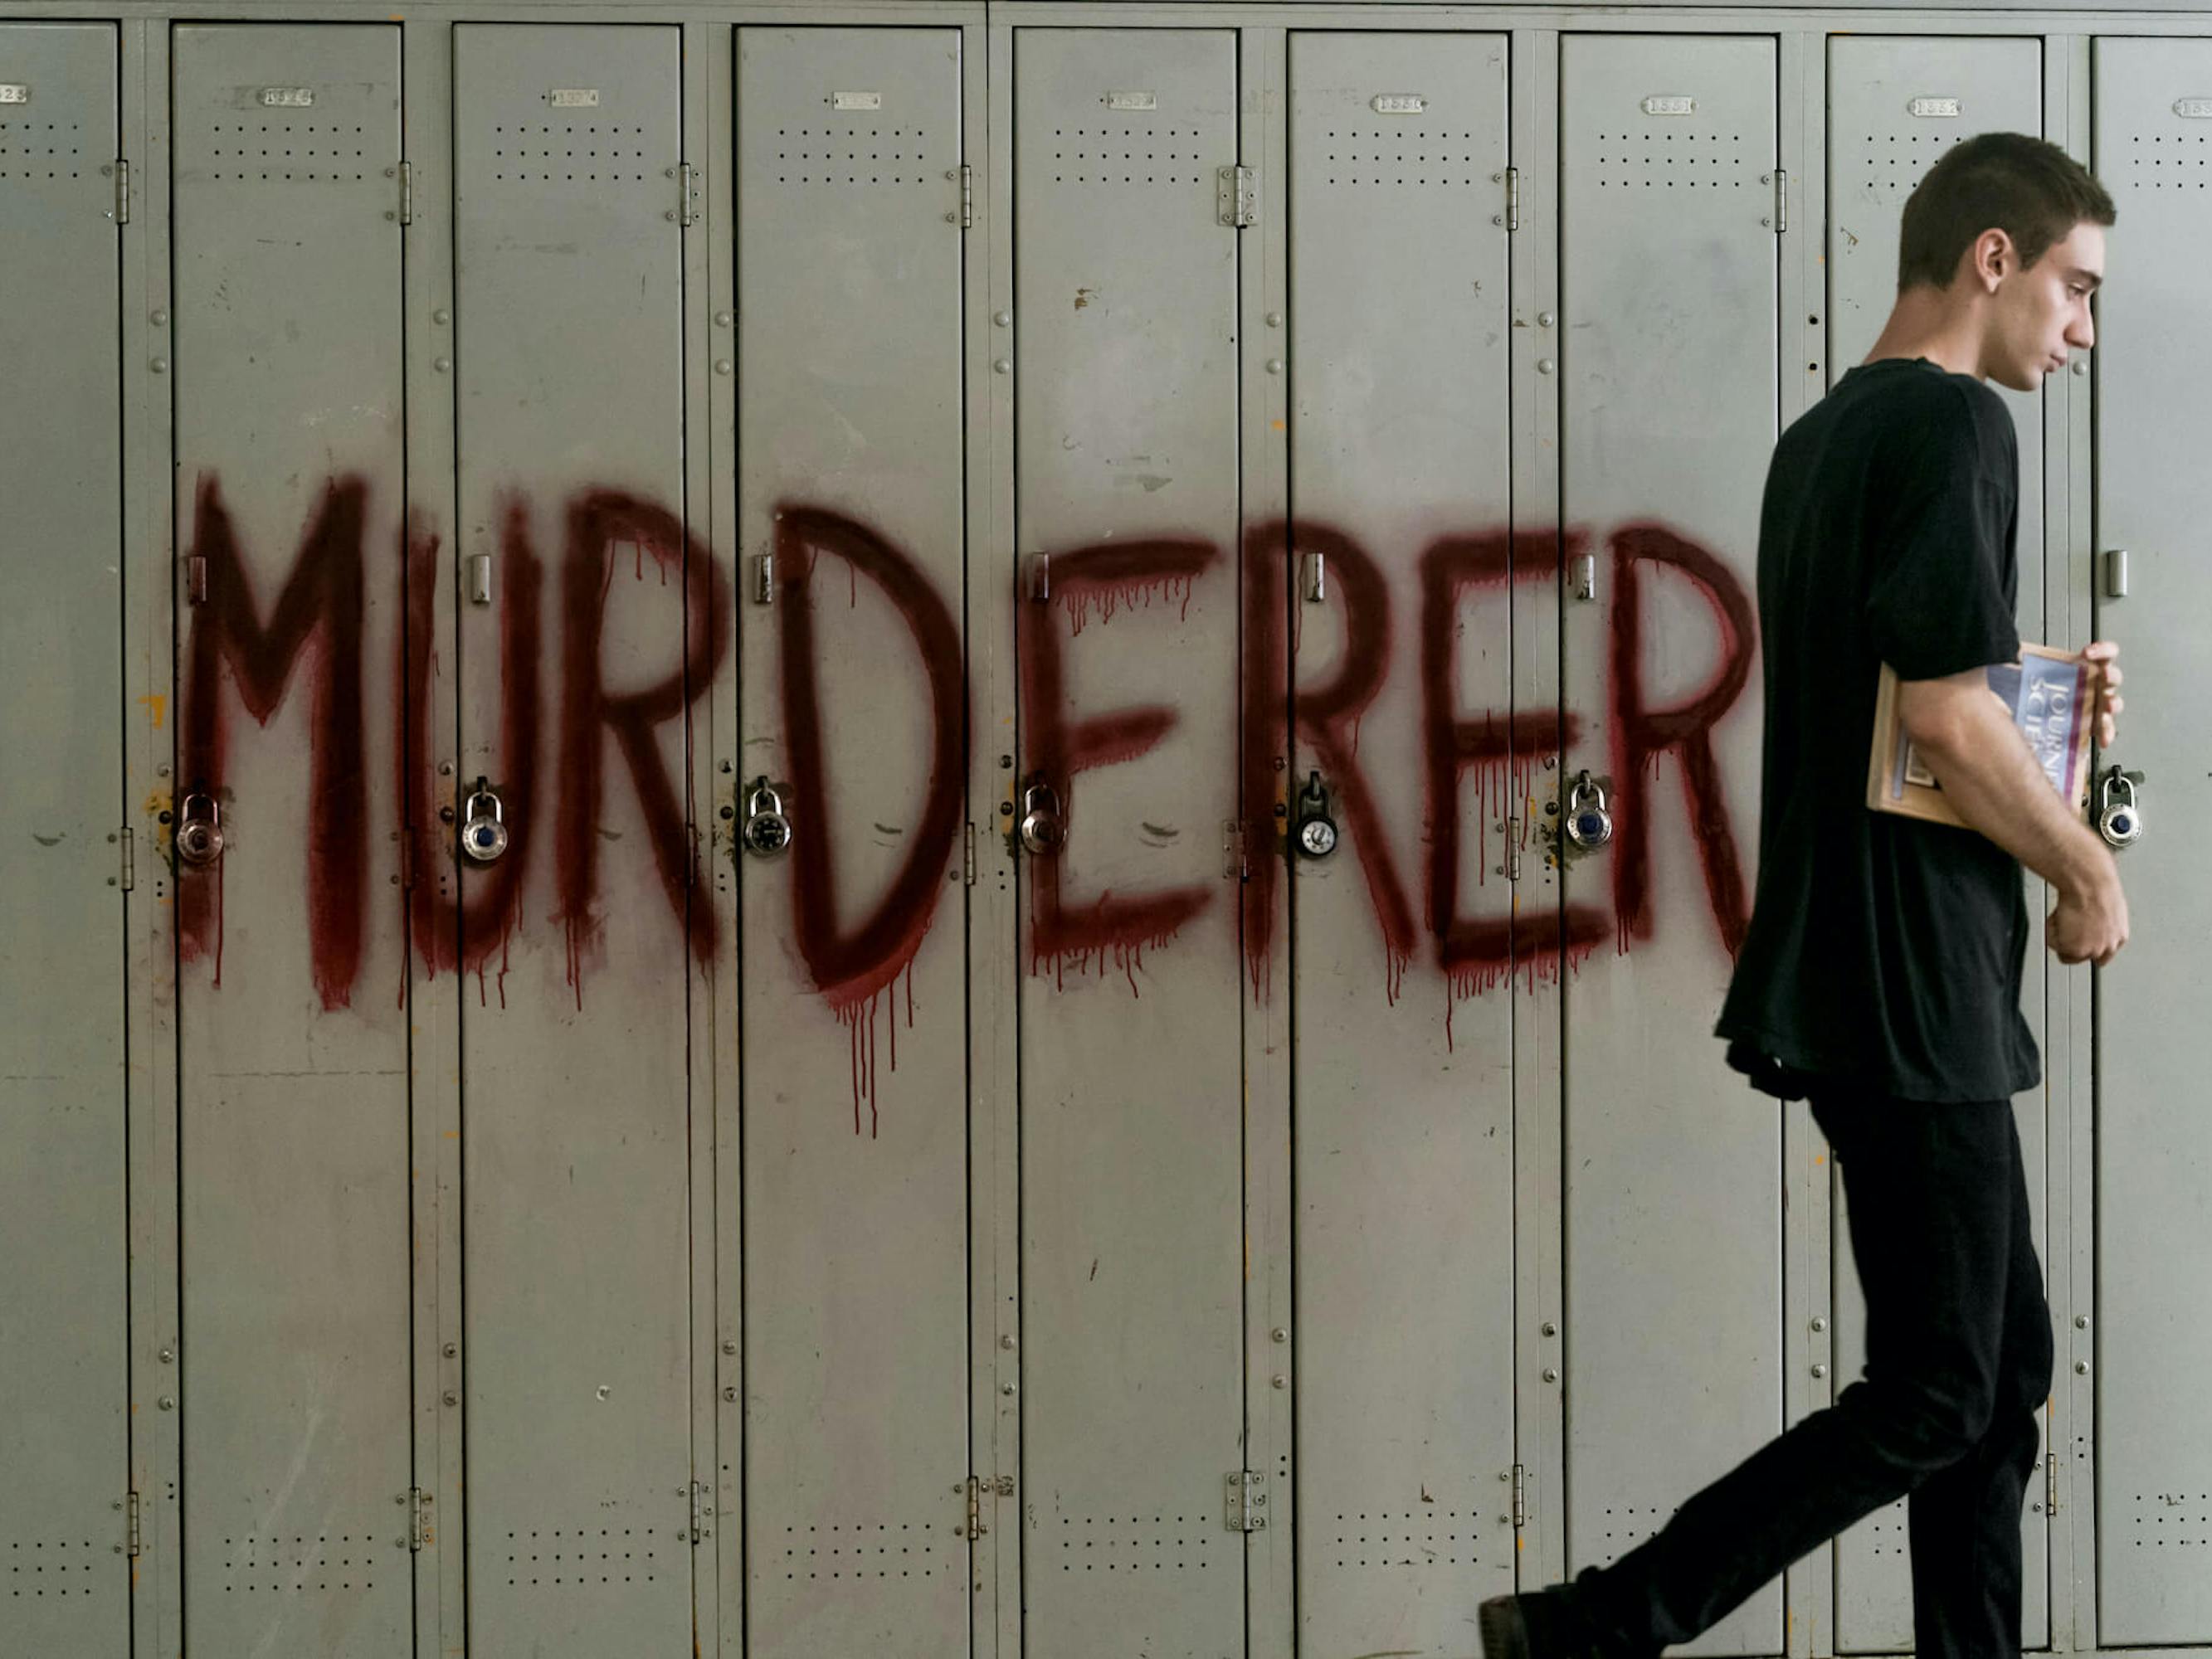 Ollie Larsson (Théodore Pellerin) wears all black and walks past lockers spray painted ‘Murderer’ in red.